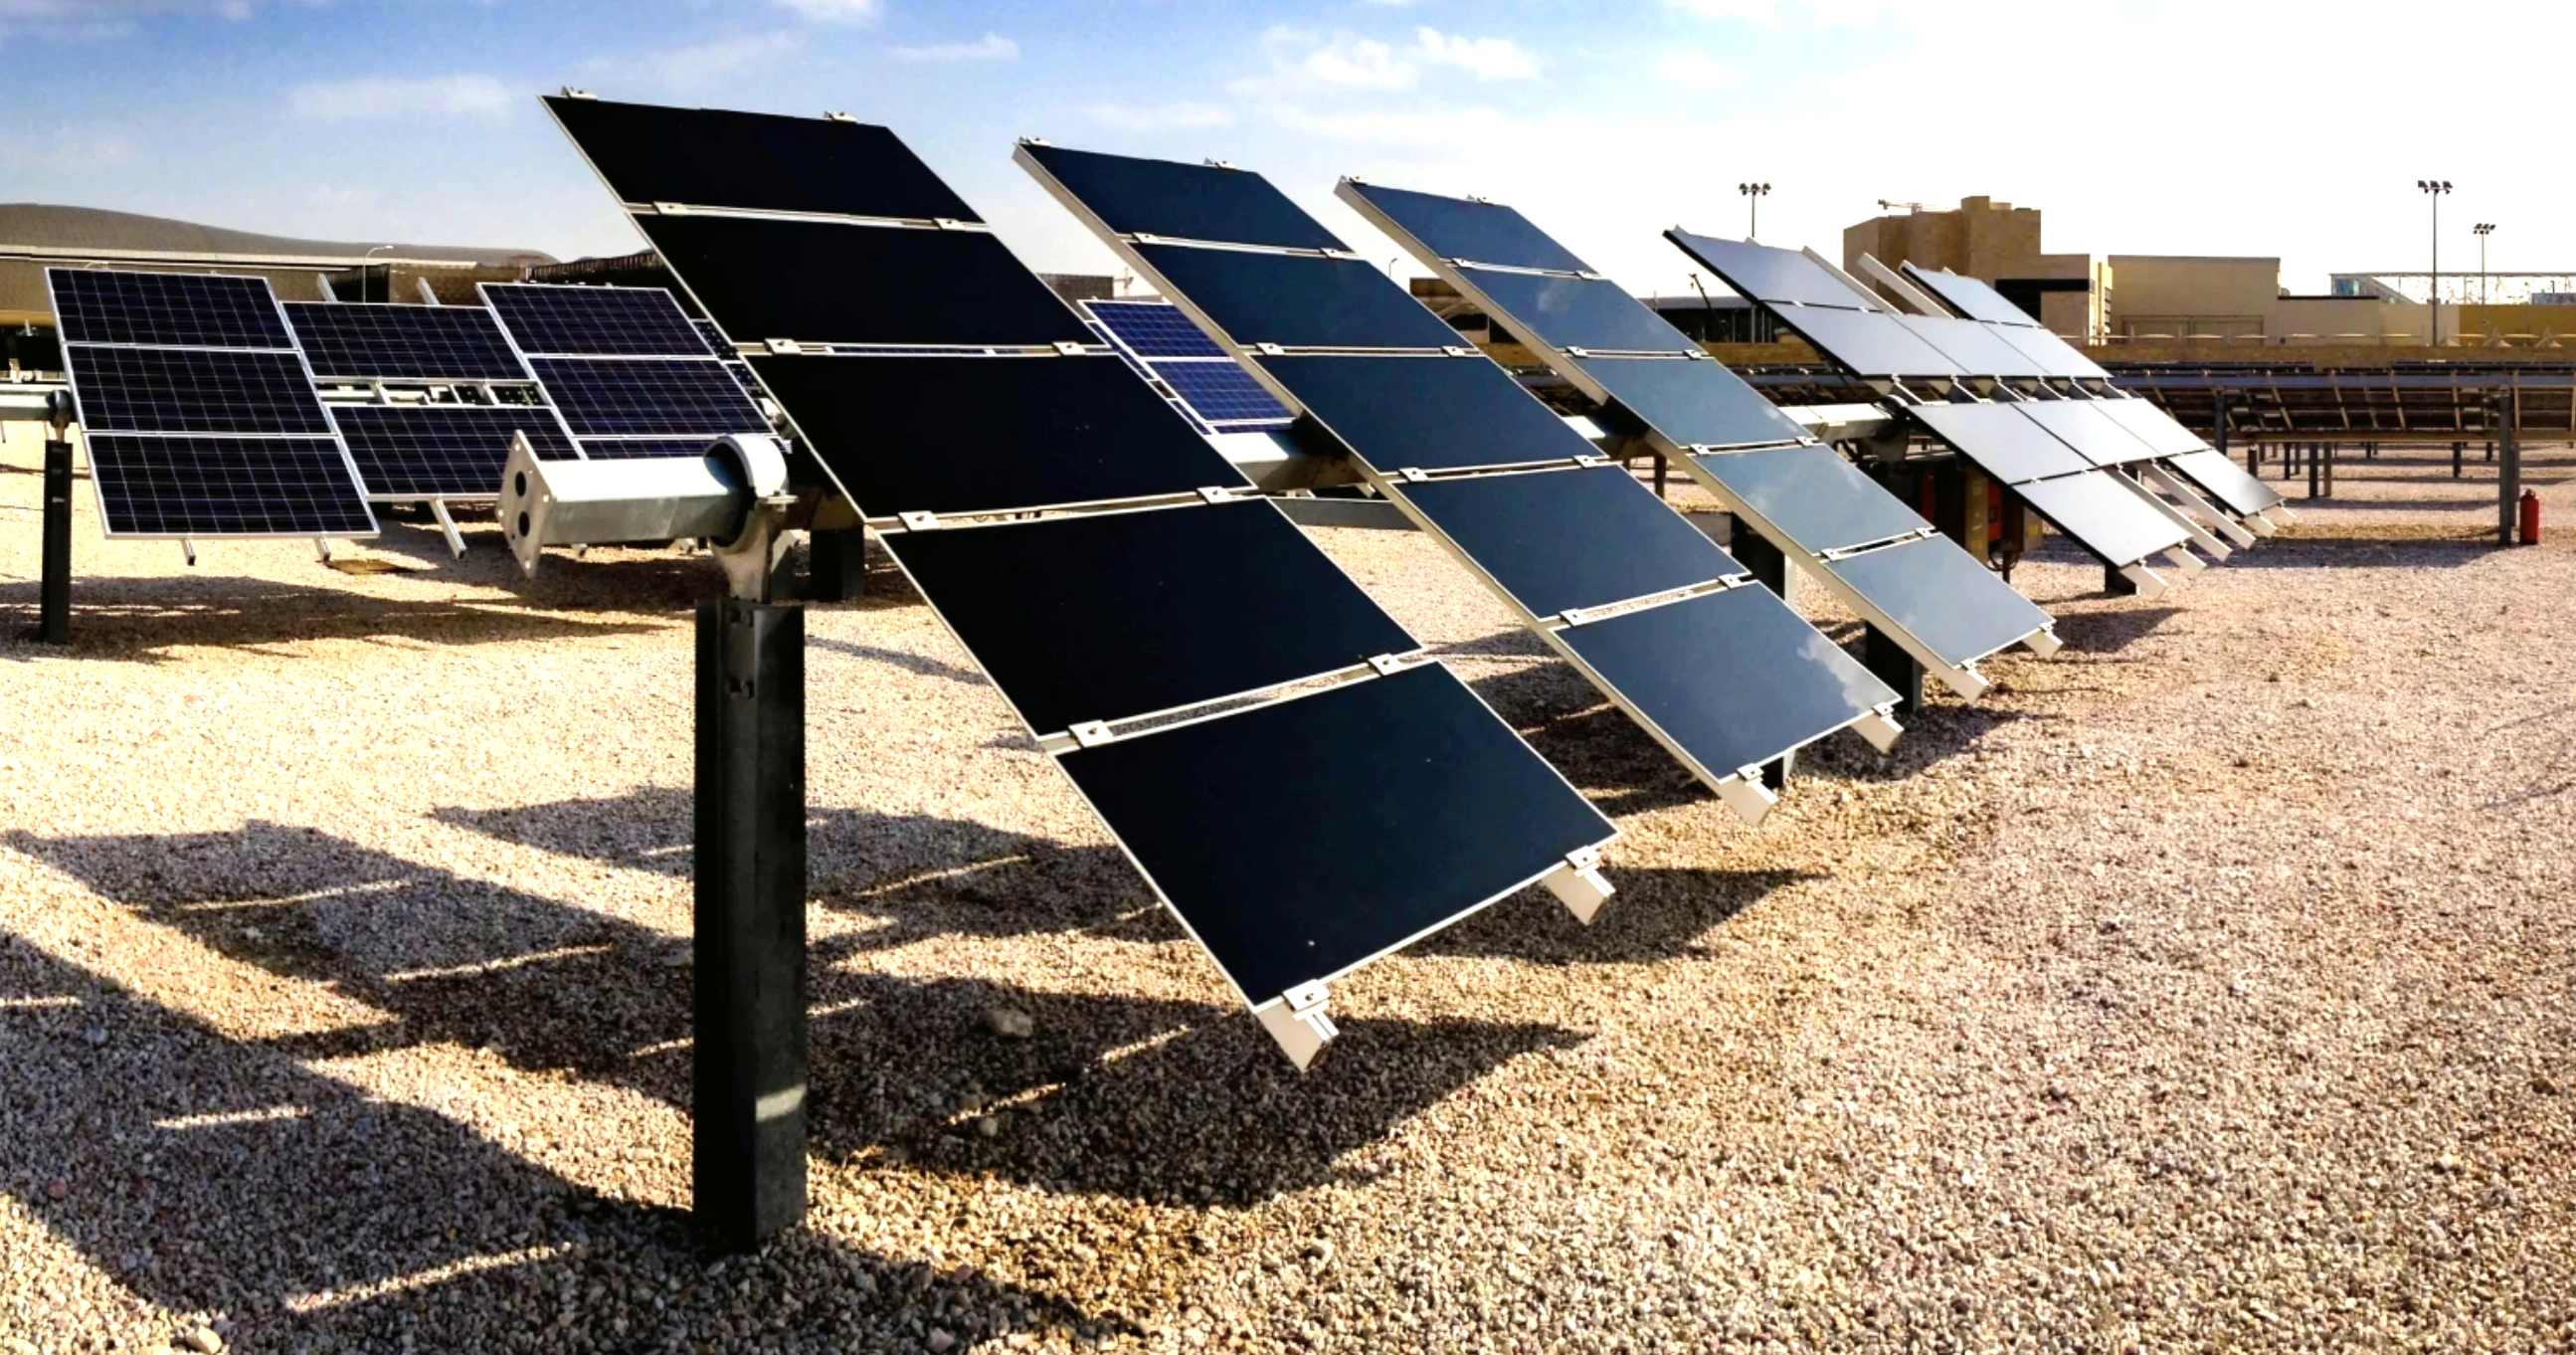 QEERI Aspires to Maximize Photovoltaic